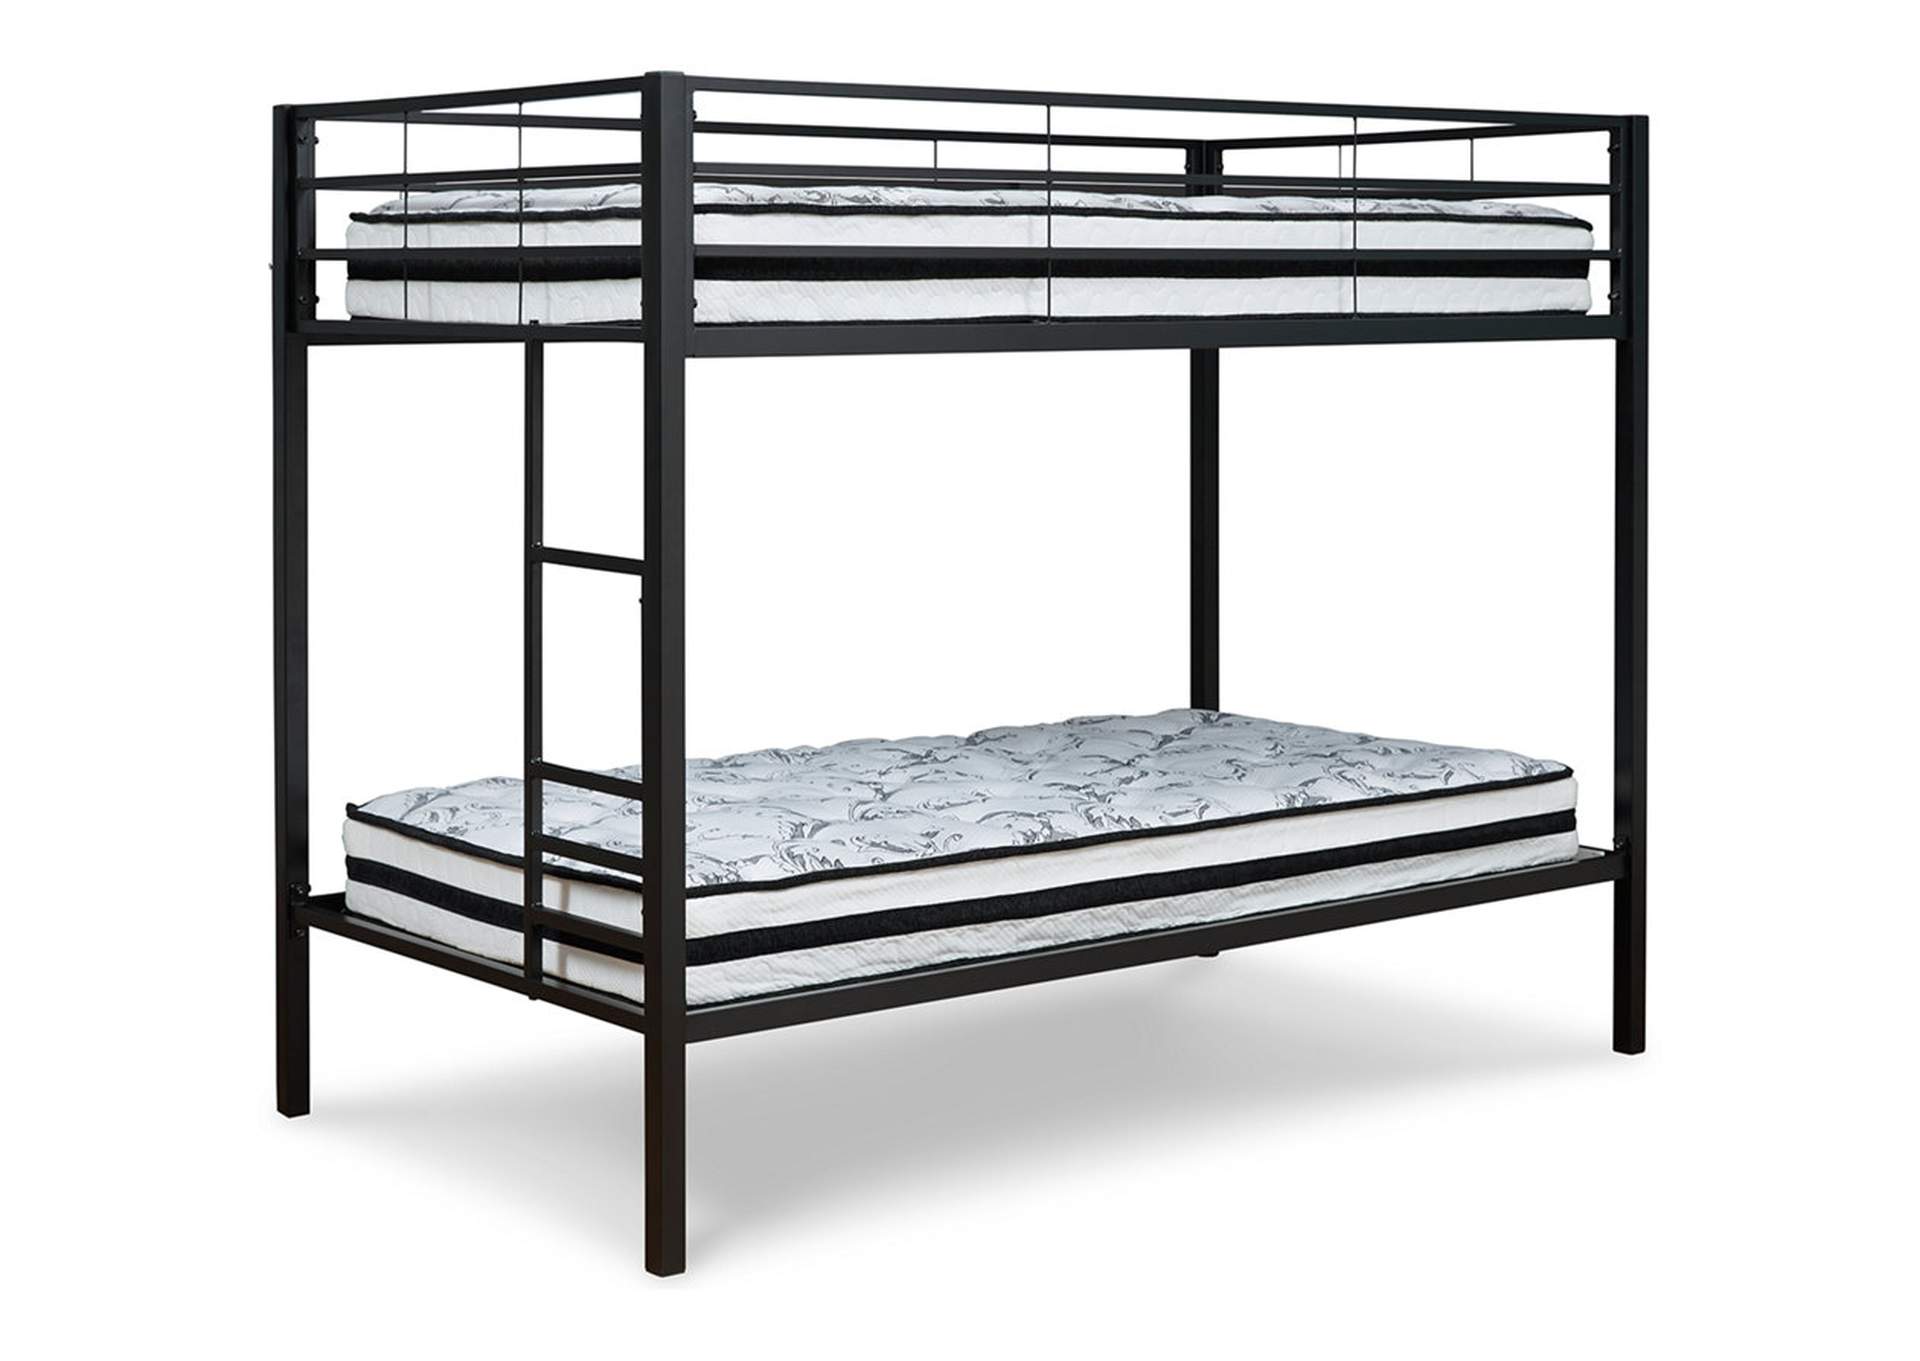 Broshard Twin Over Metal Bunk Bed, Iron Bunk Bed Designs